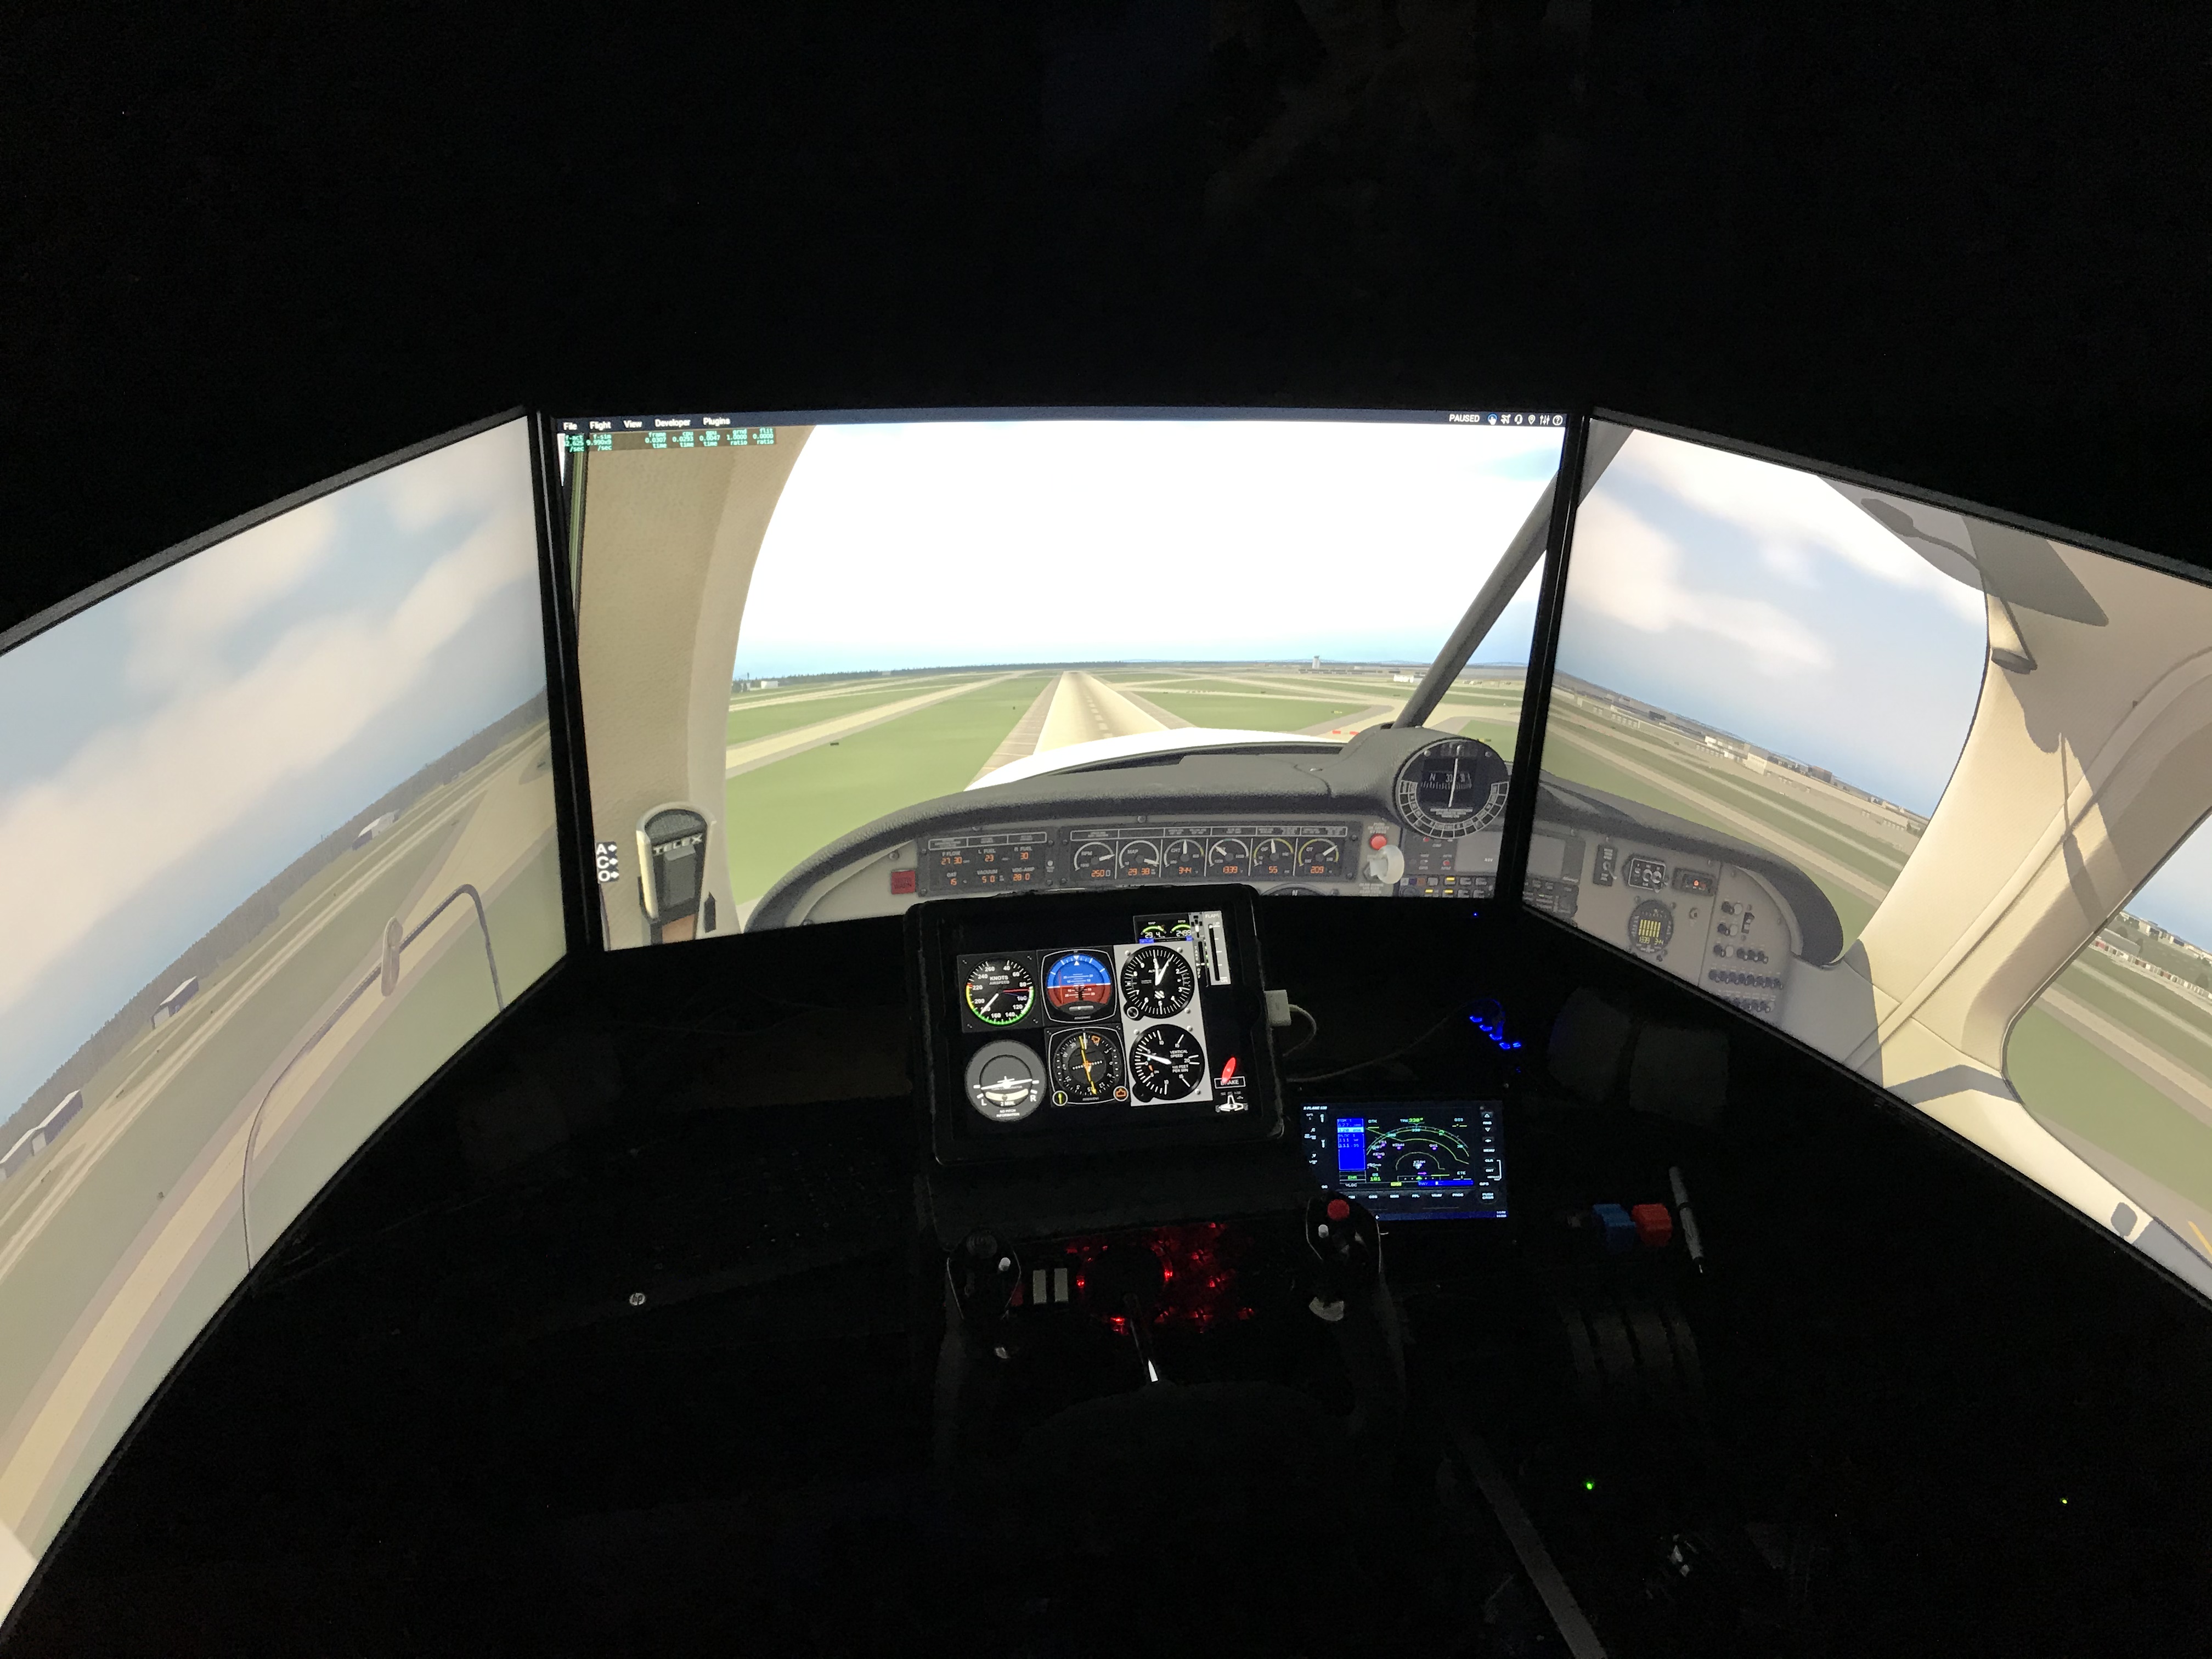 Flight Simulator(s) - The Aviationist